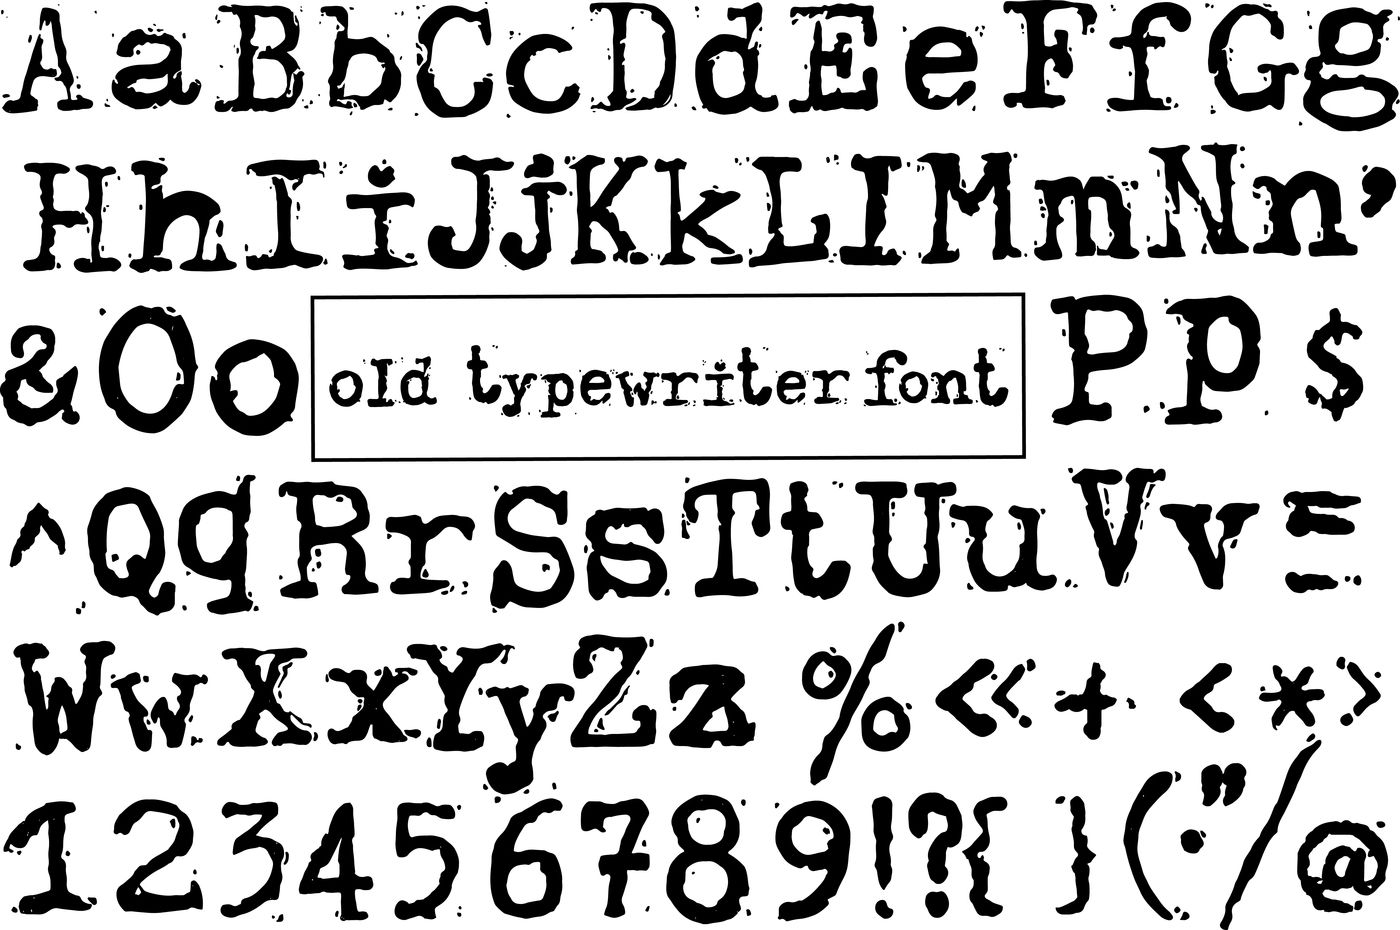 Old Typewriter Font By Babii Design Thehungryjpeg